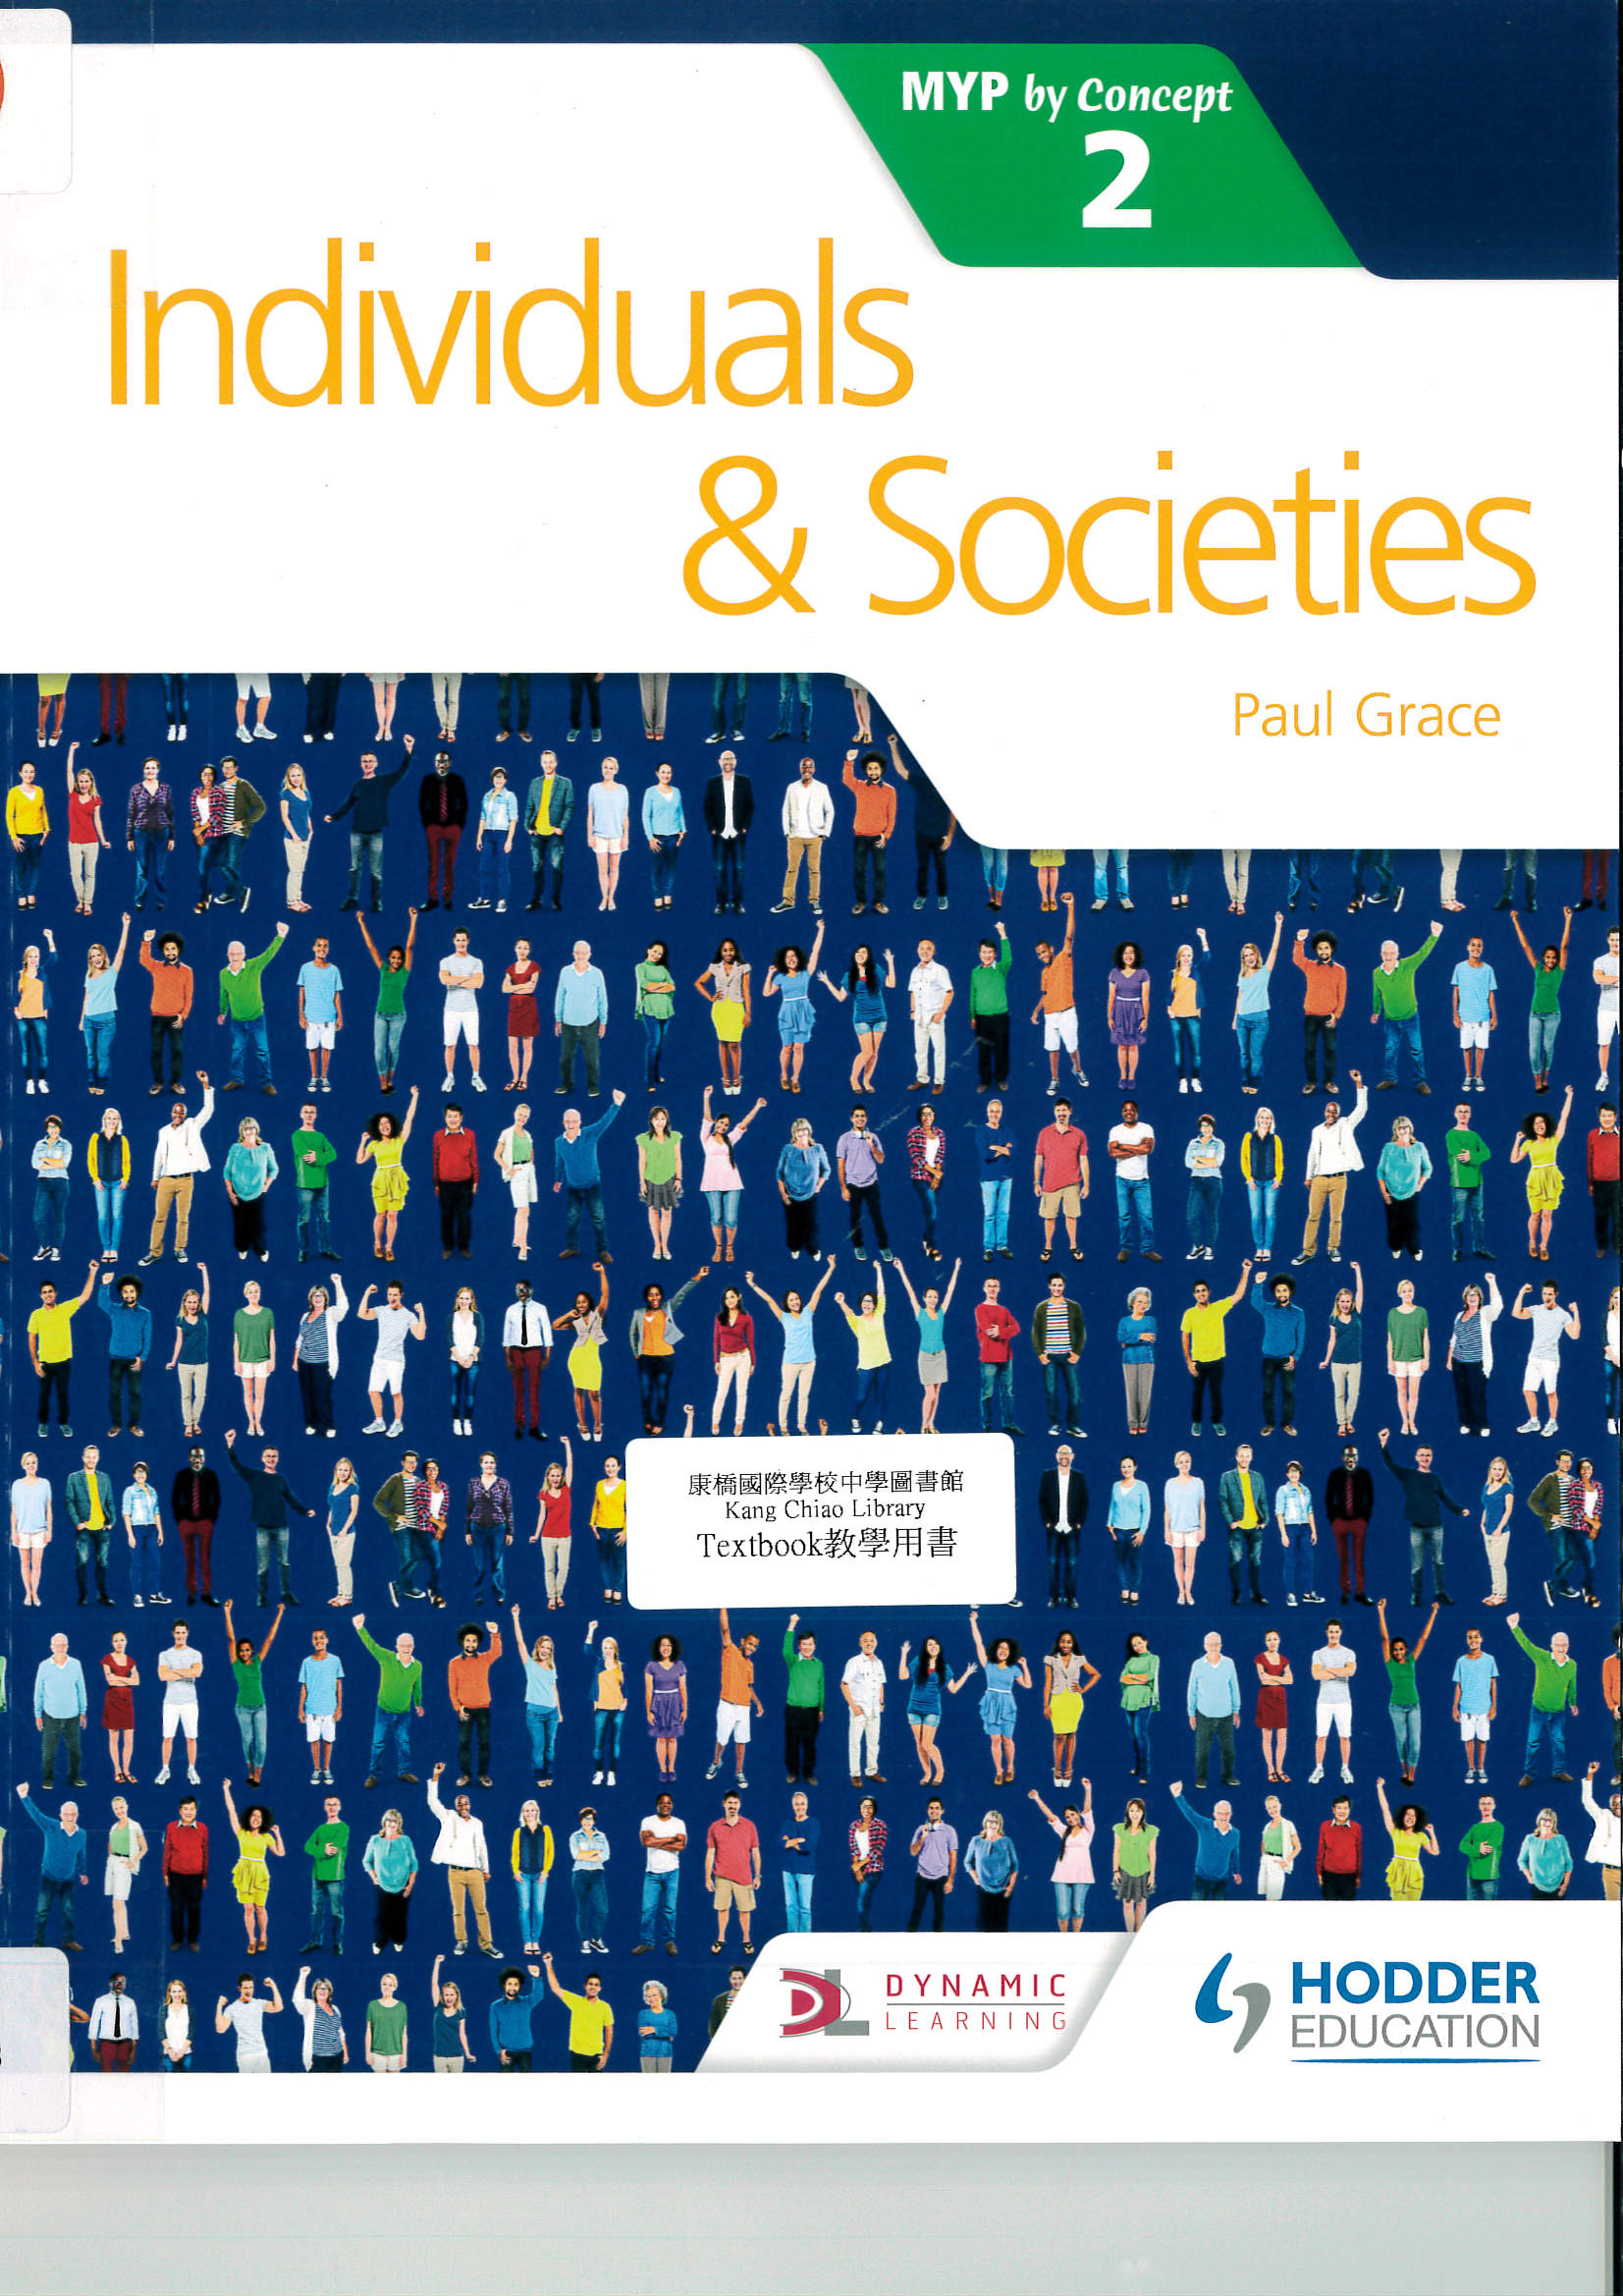 Individuals & societies : MYP by concept 2